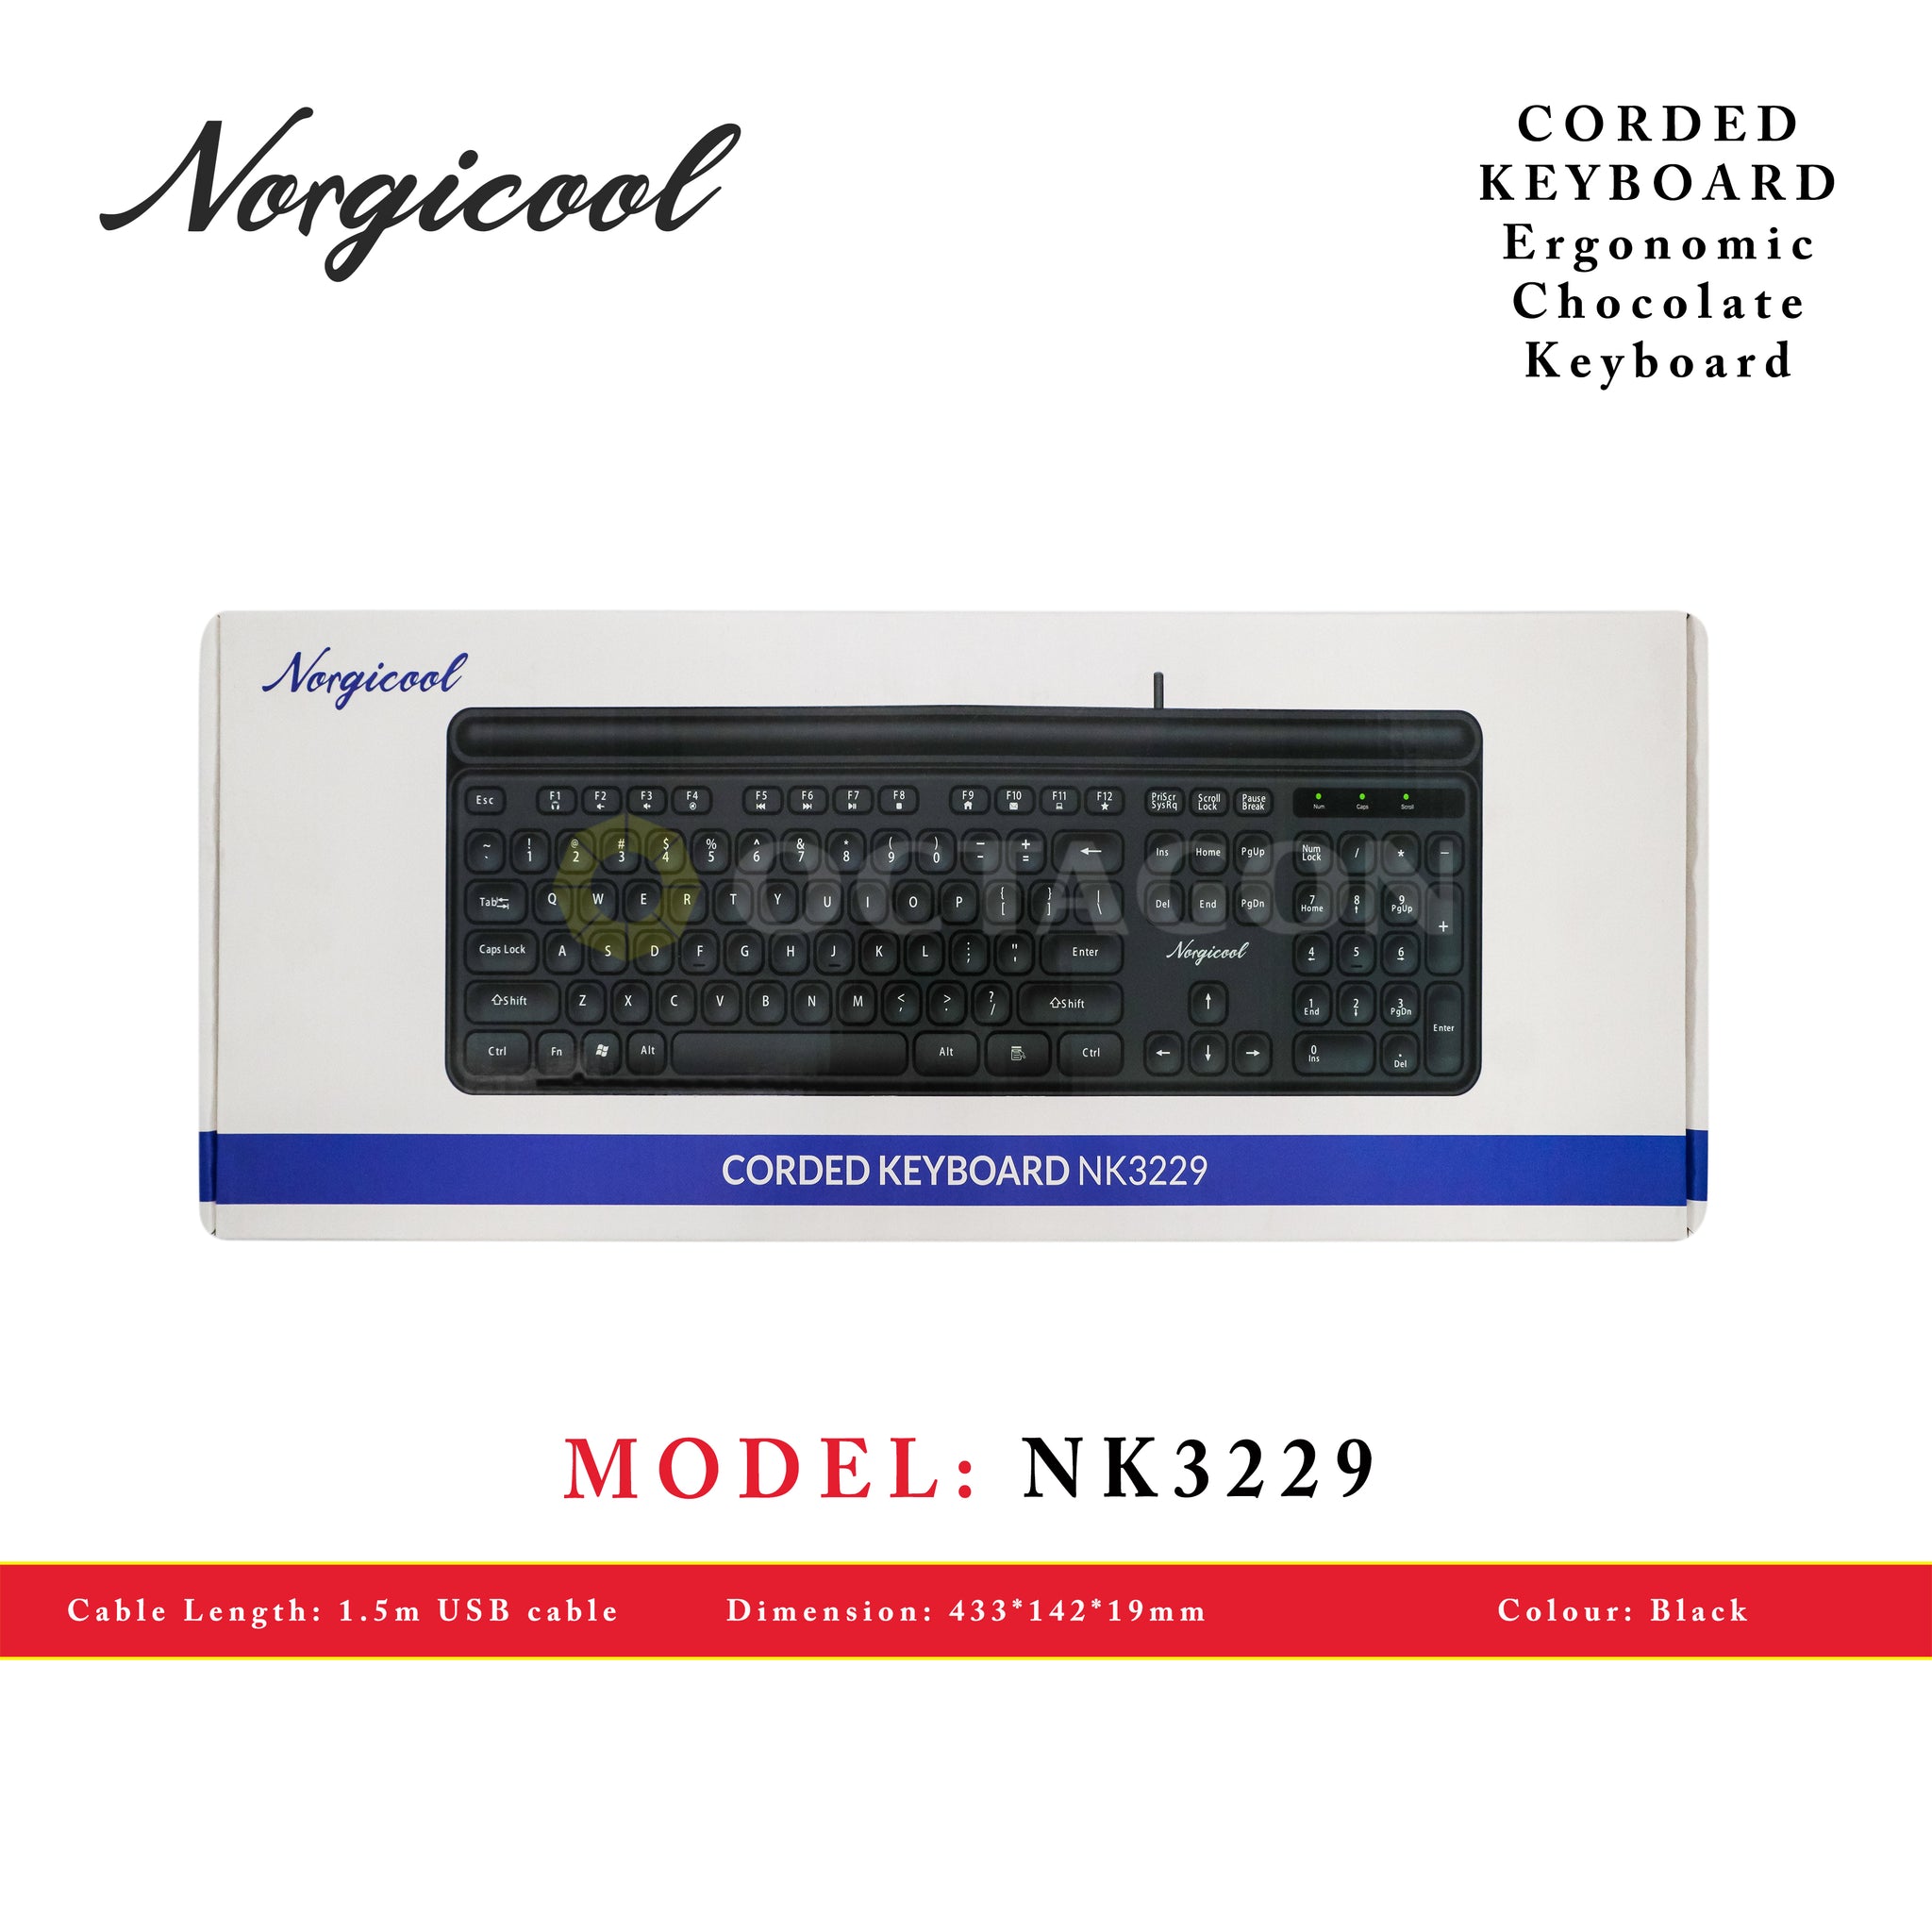 NORGICOOL NK3229 USB KEYBOARD ERGONOMIC CHOCOLATE STYLE